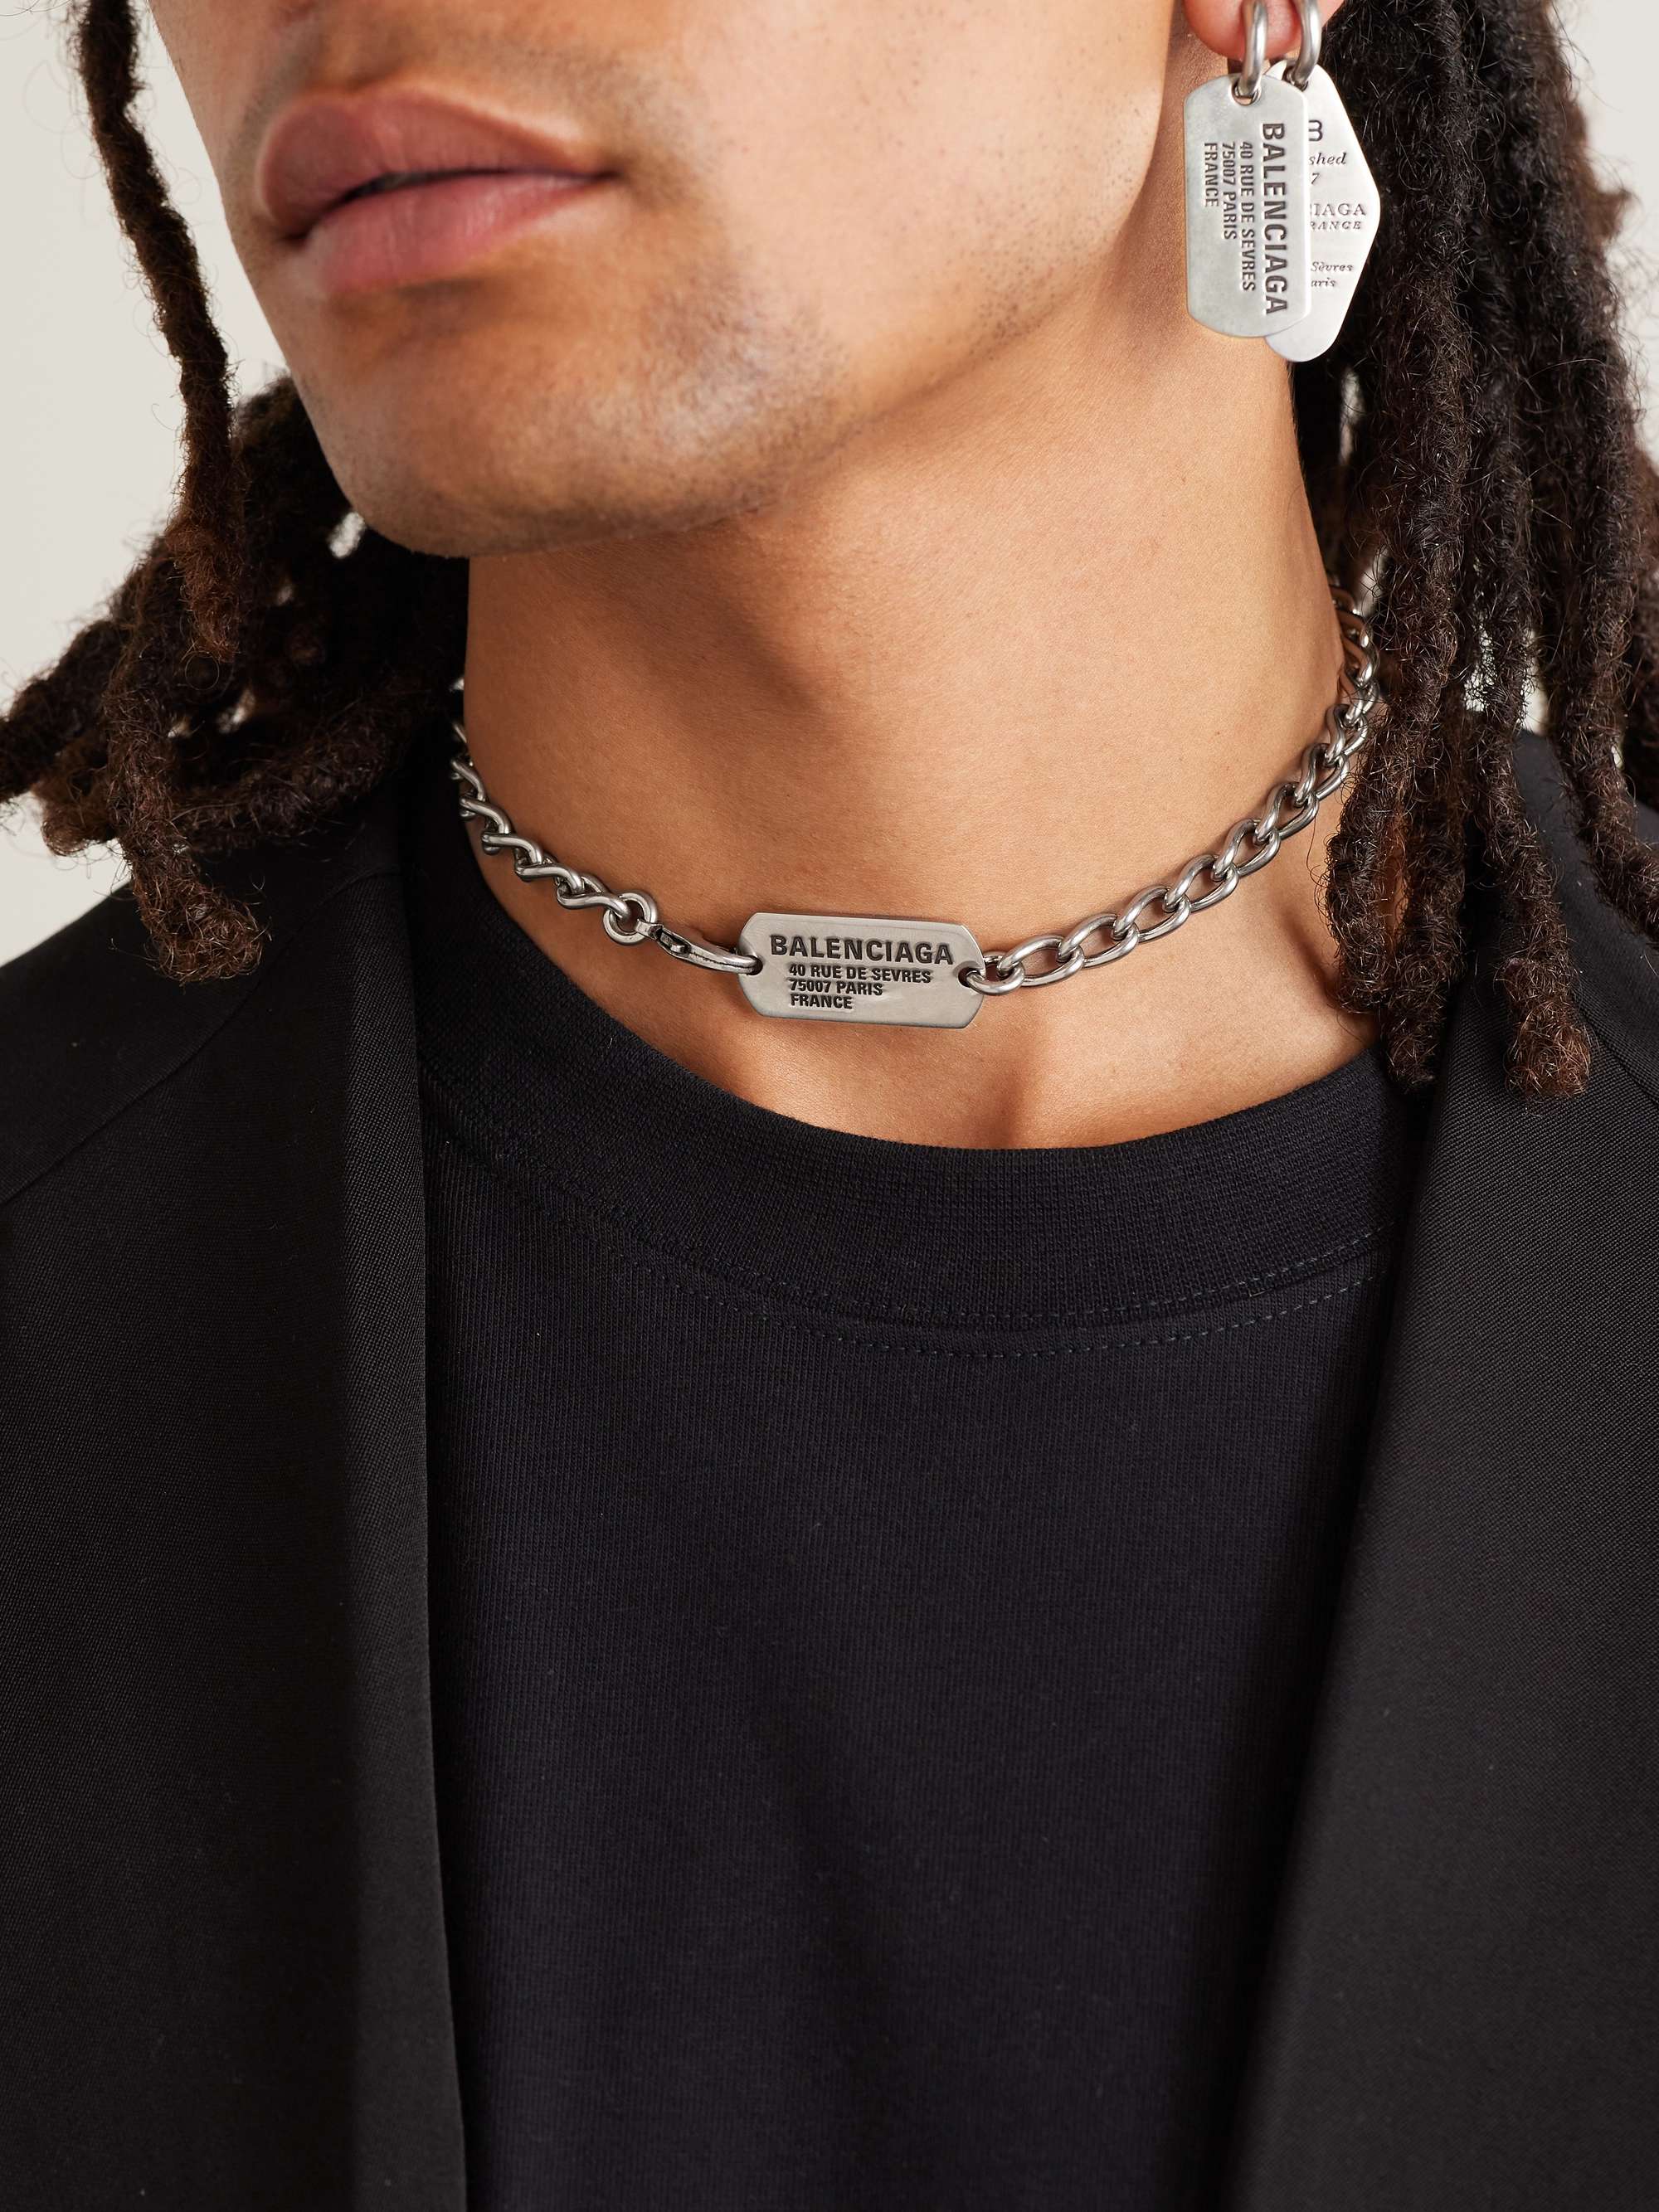 BALENCIAGA Antiqued Silver-Tone Chain Necklace for Men | MR PORTER